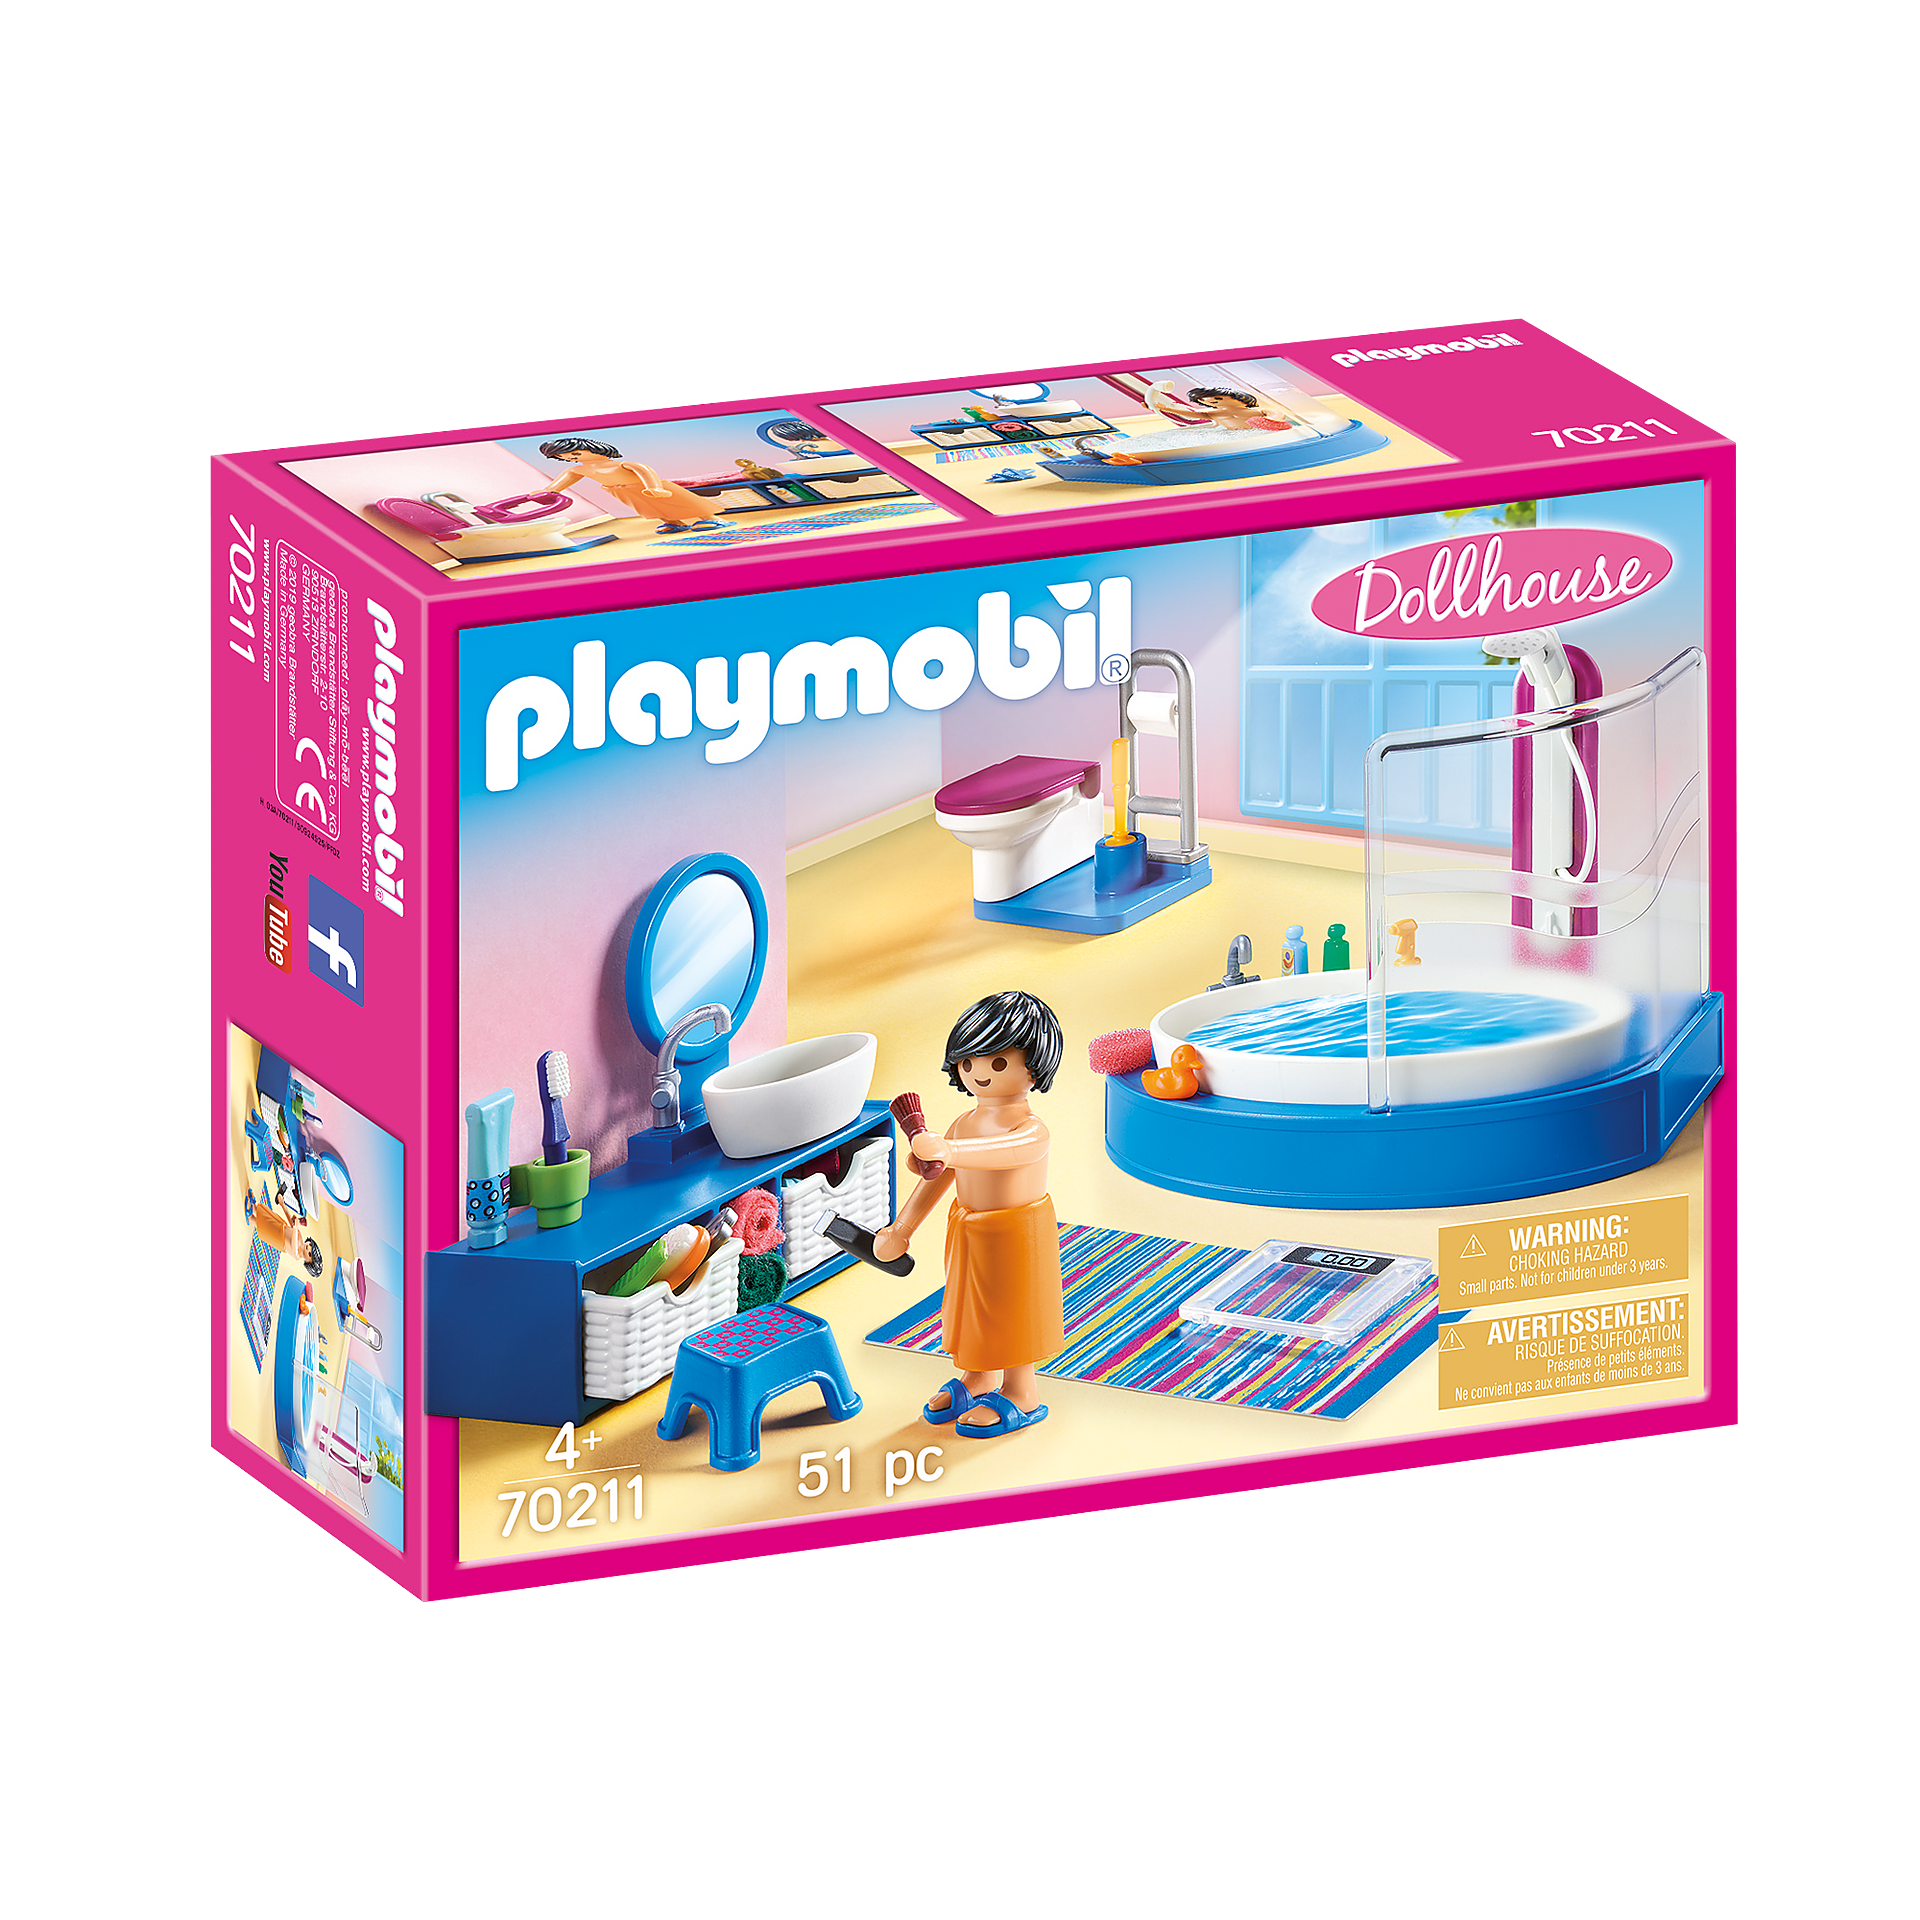 Playmobil-Dollhouse - Bathroom with Tub-70211-Legacy Toys